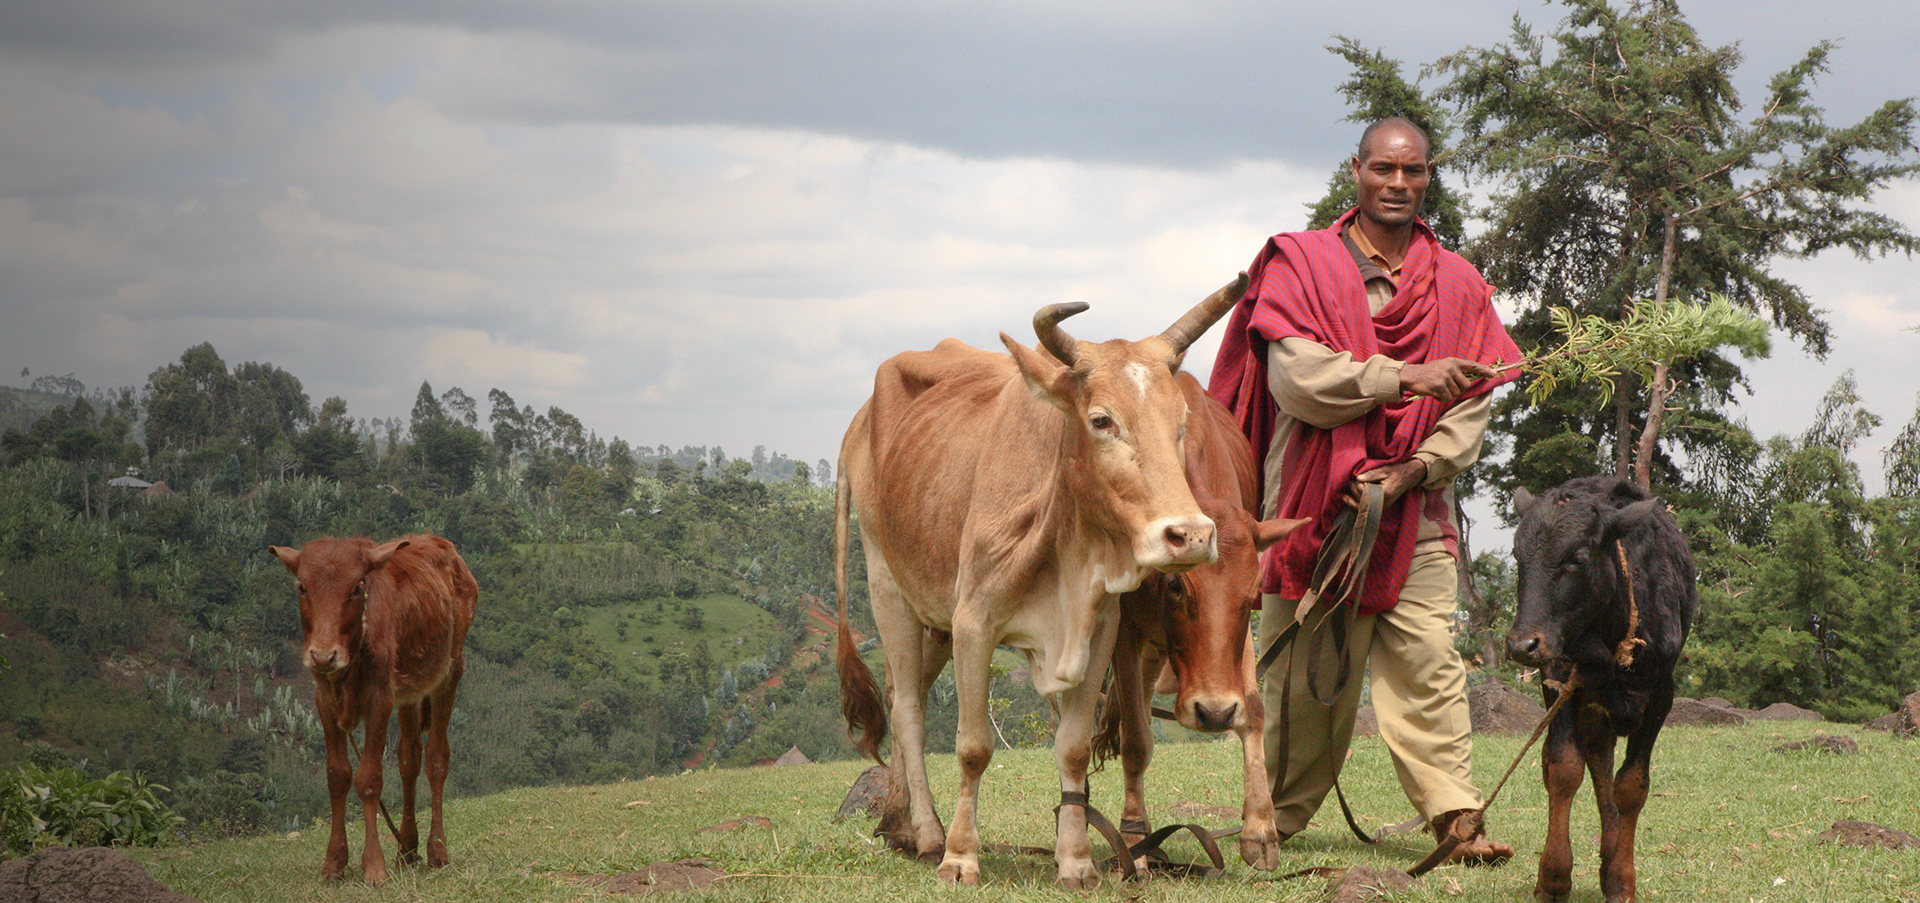 Man walking with cows on farmland - Zoetis